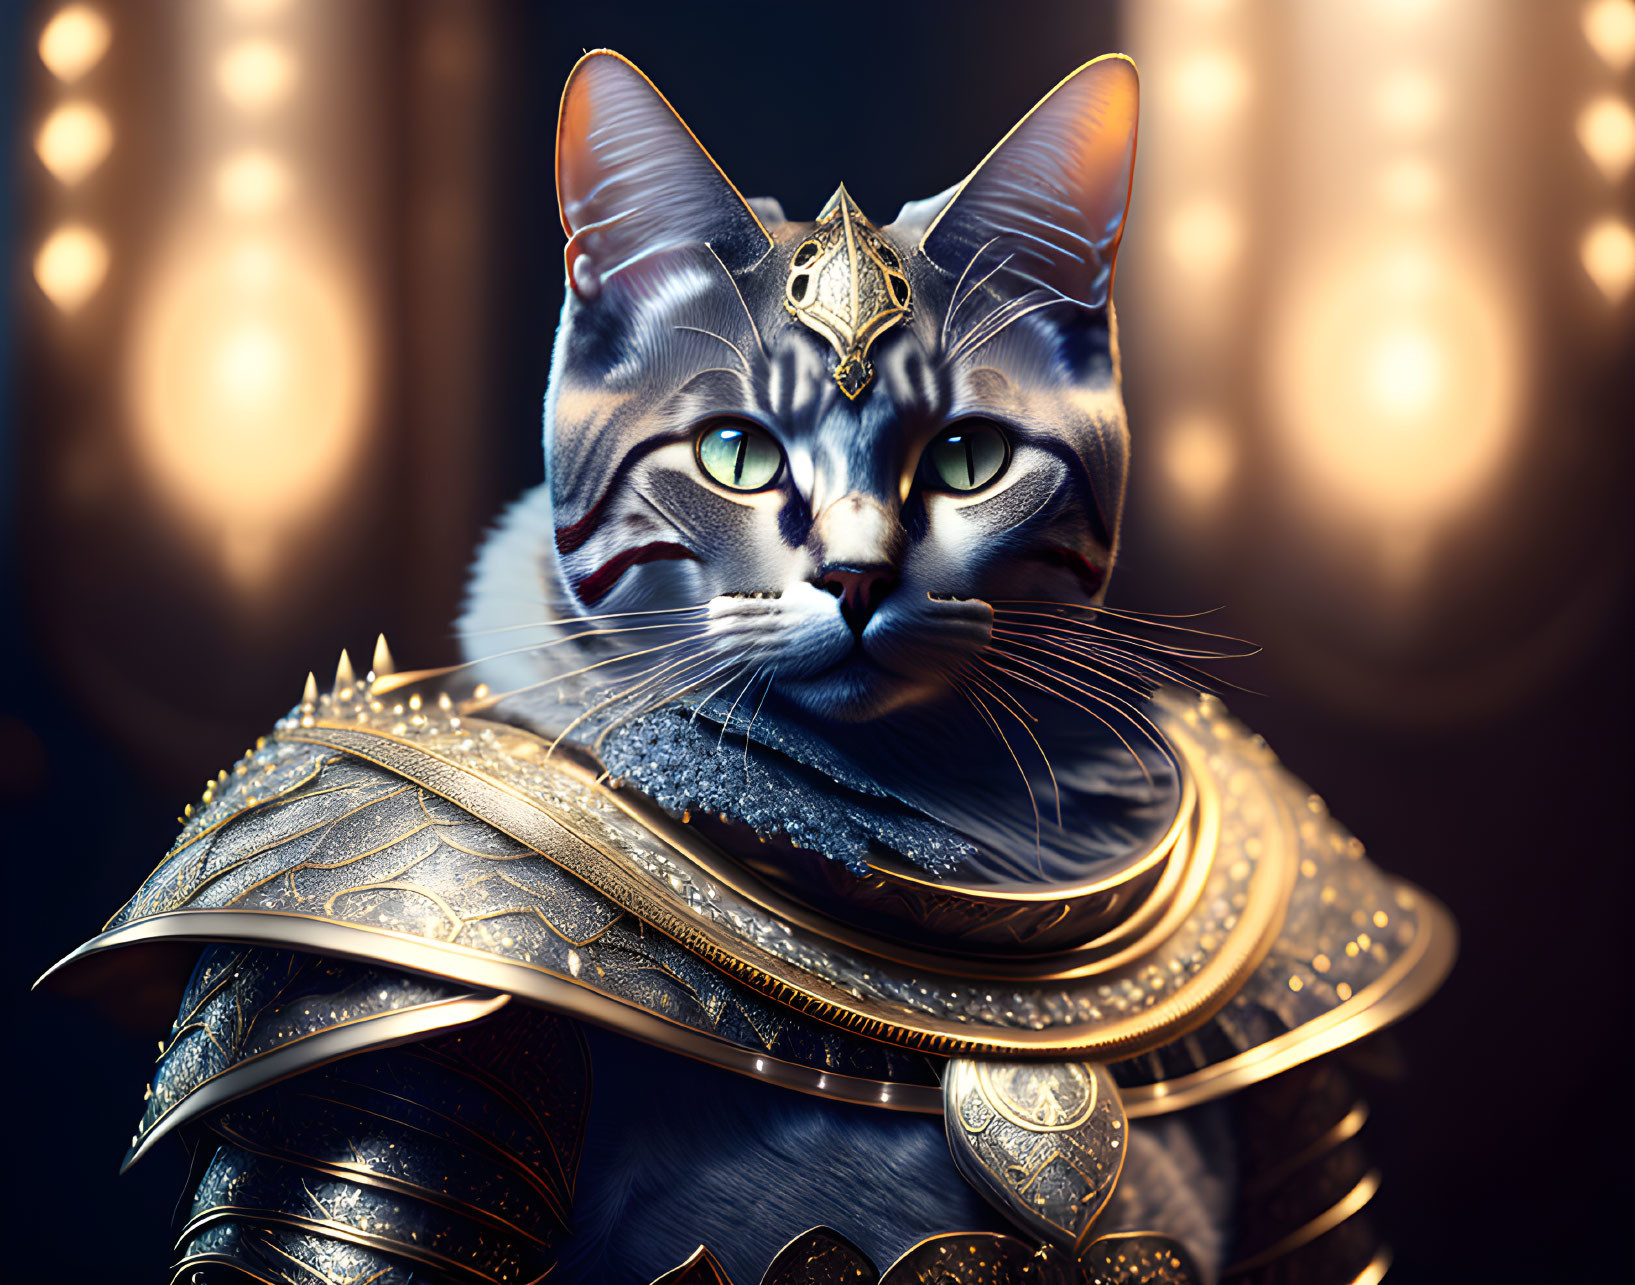 Regal cat digital artwork in golden armor with green eyes